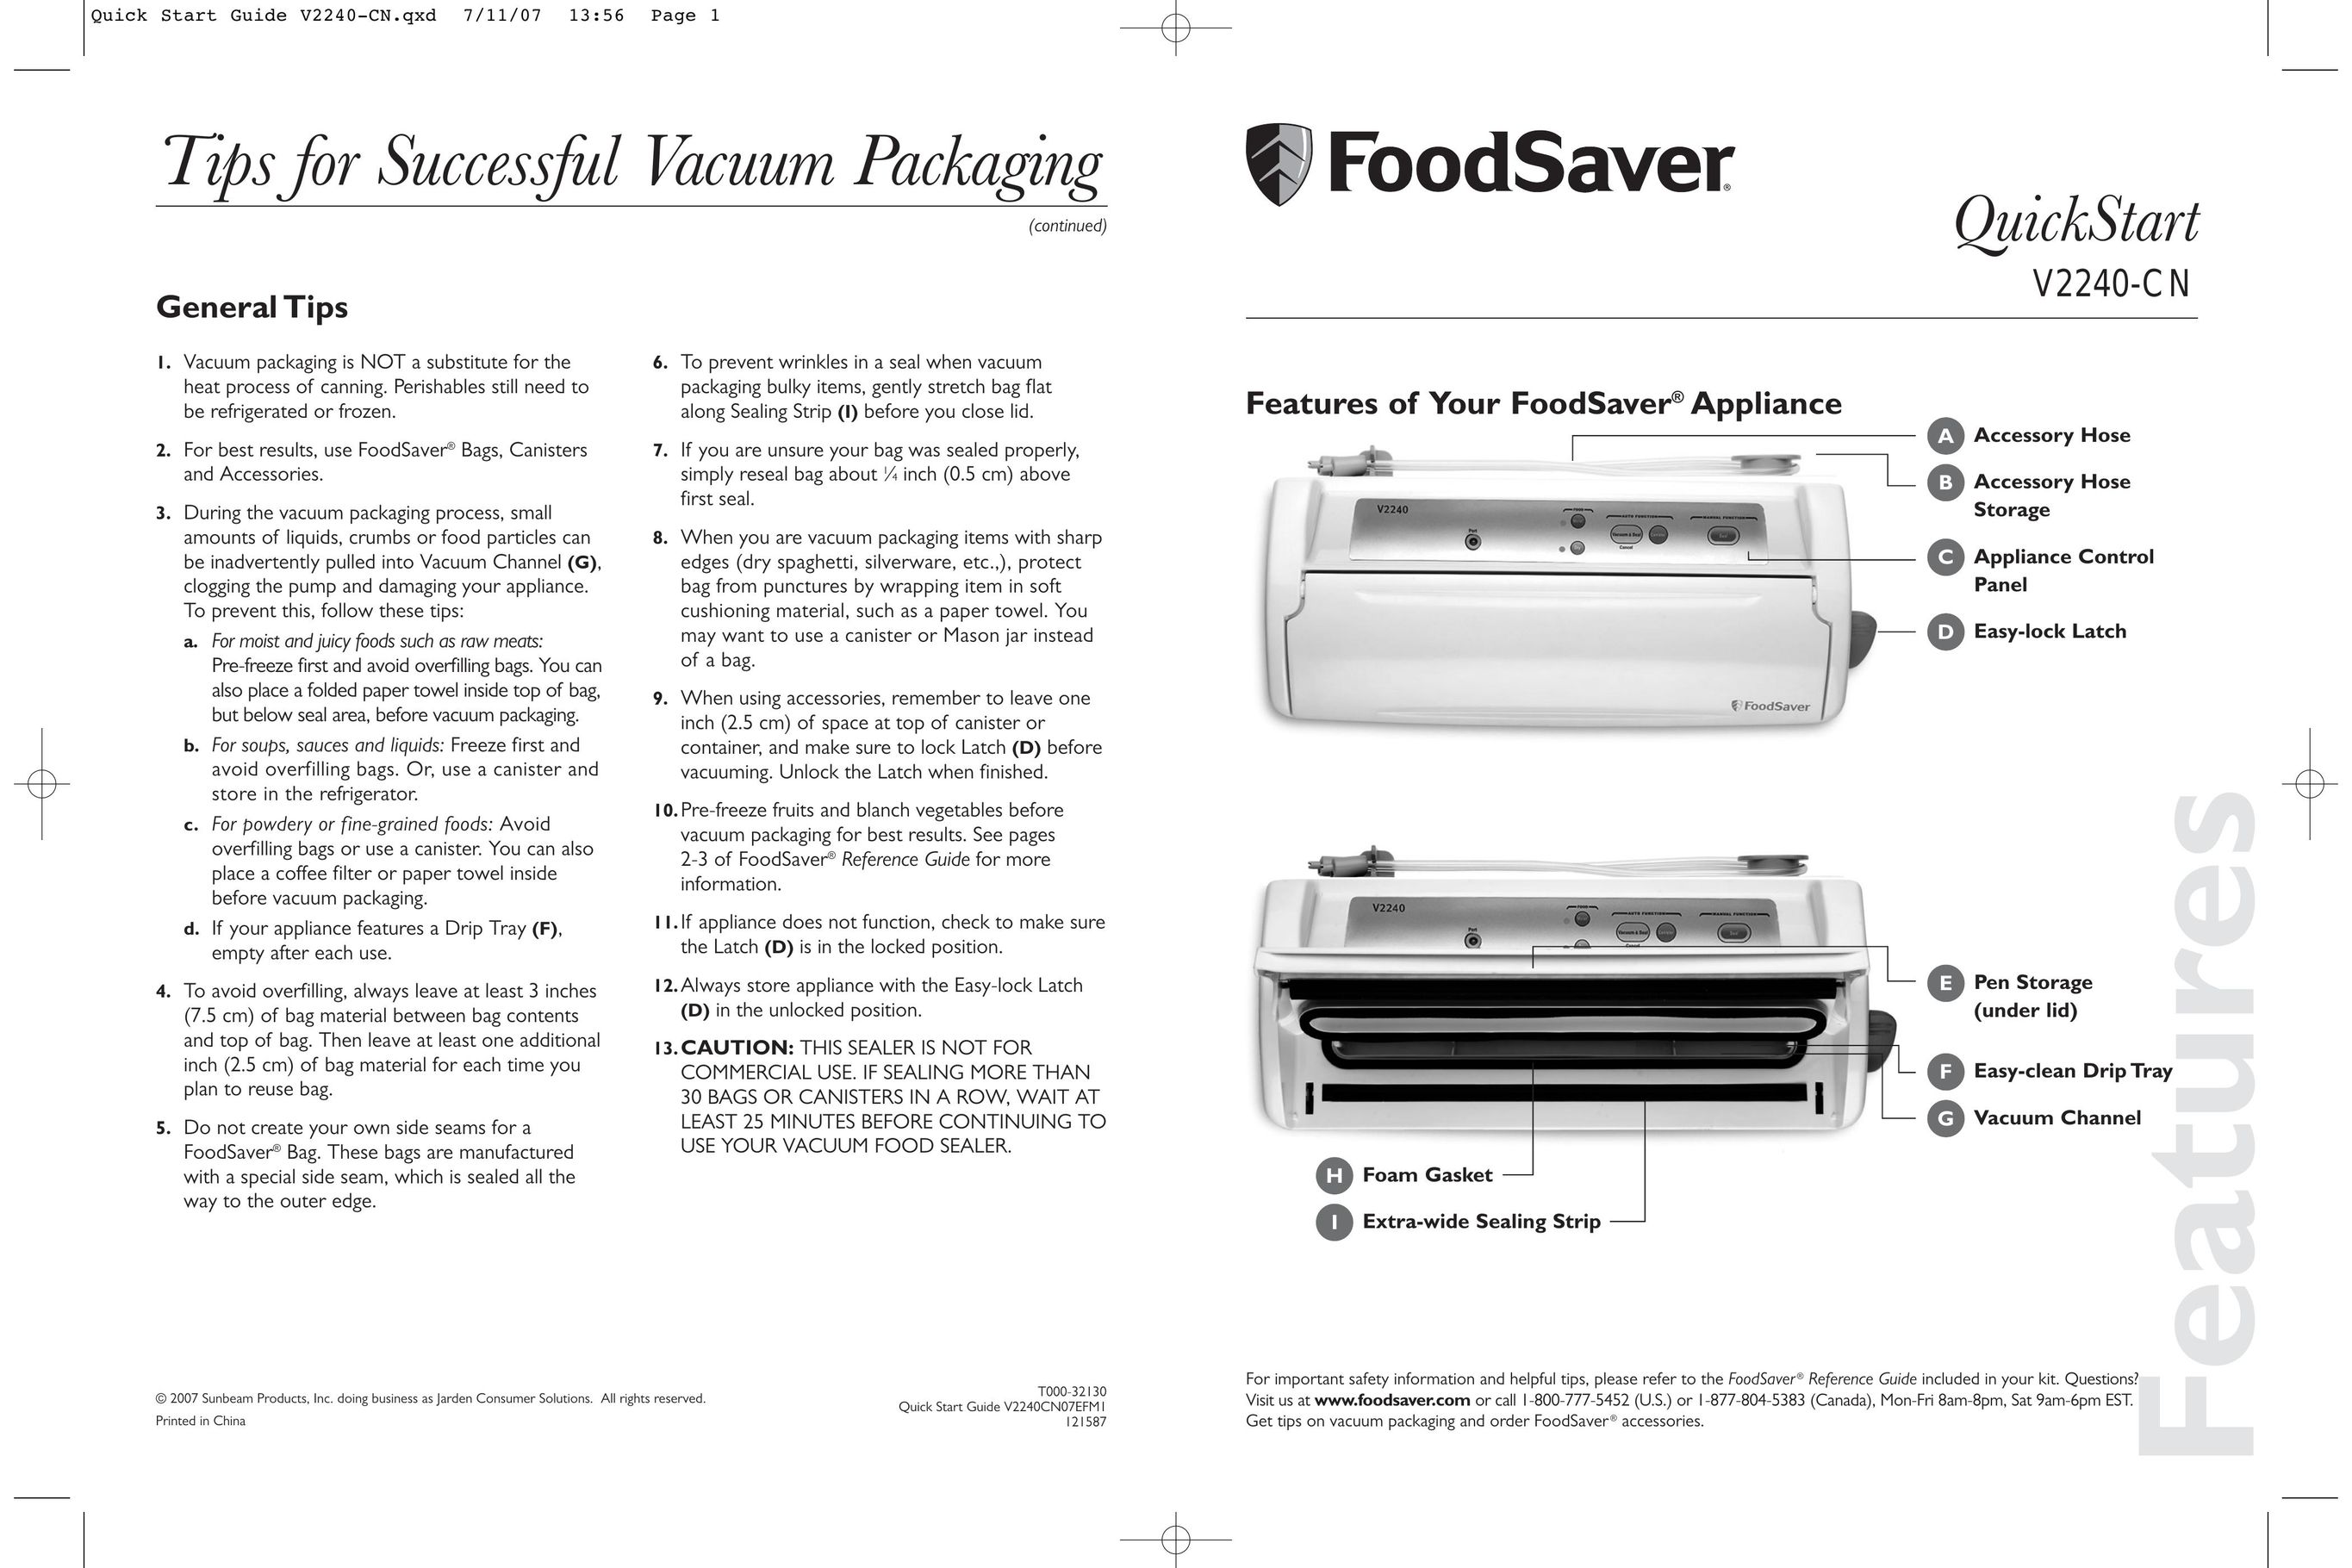 FoodSaver V2240-CN Food Saver User Manual